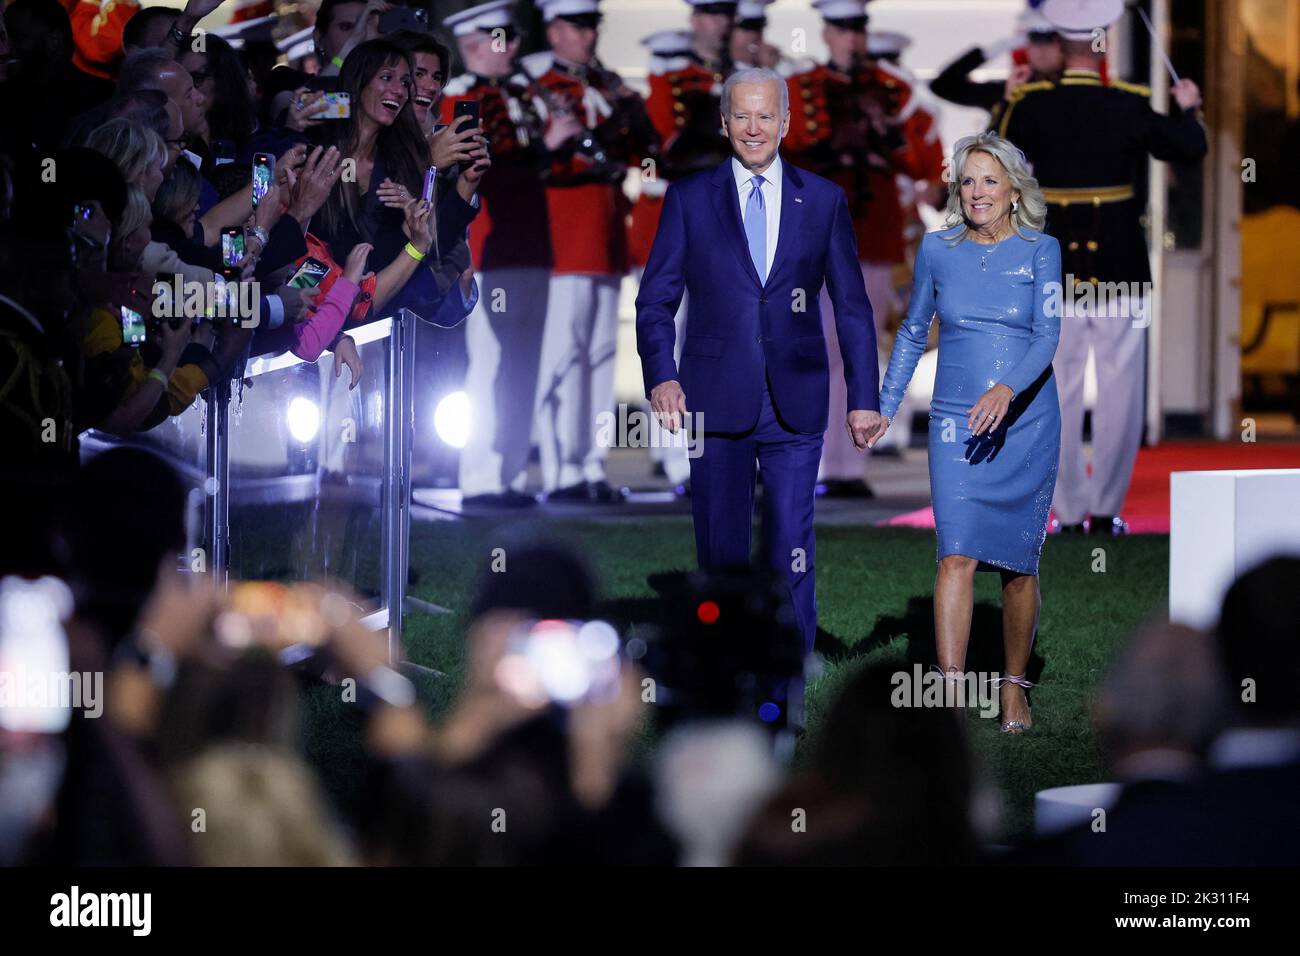 U.S. President Joe Biden and First Lady Jill Biden attend a performance by British rocker Elton John at the White House in Washington, U.S., September 23, 2022. REUTERS/Evelyn Hockstein Stock Photo